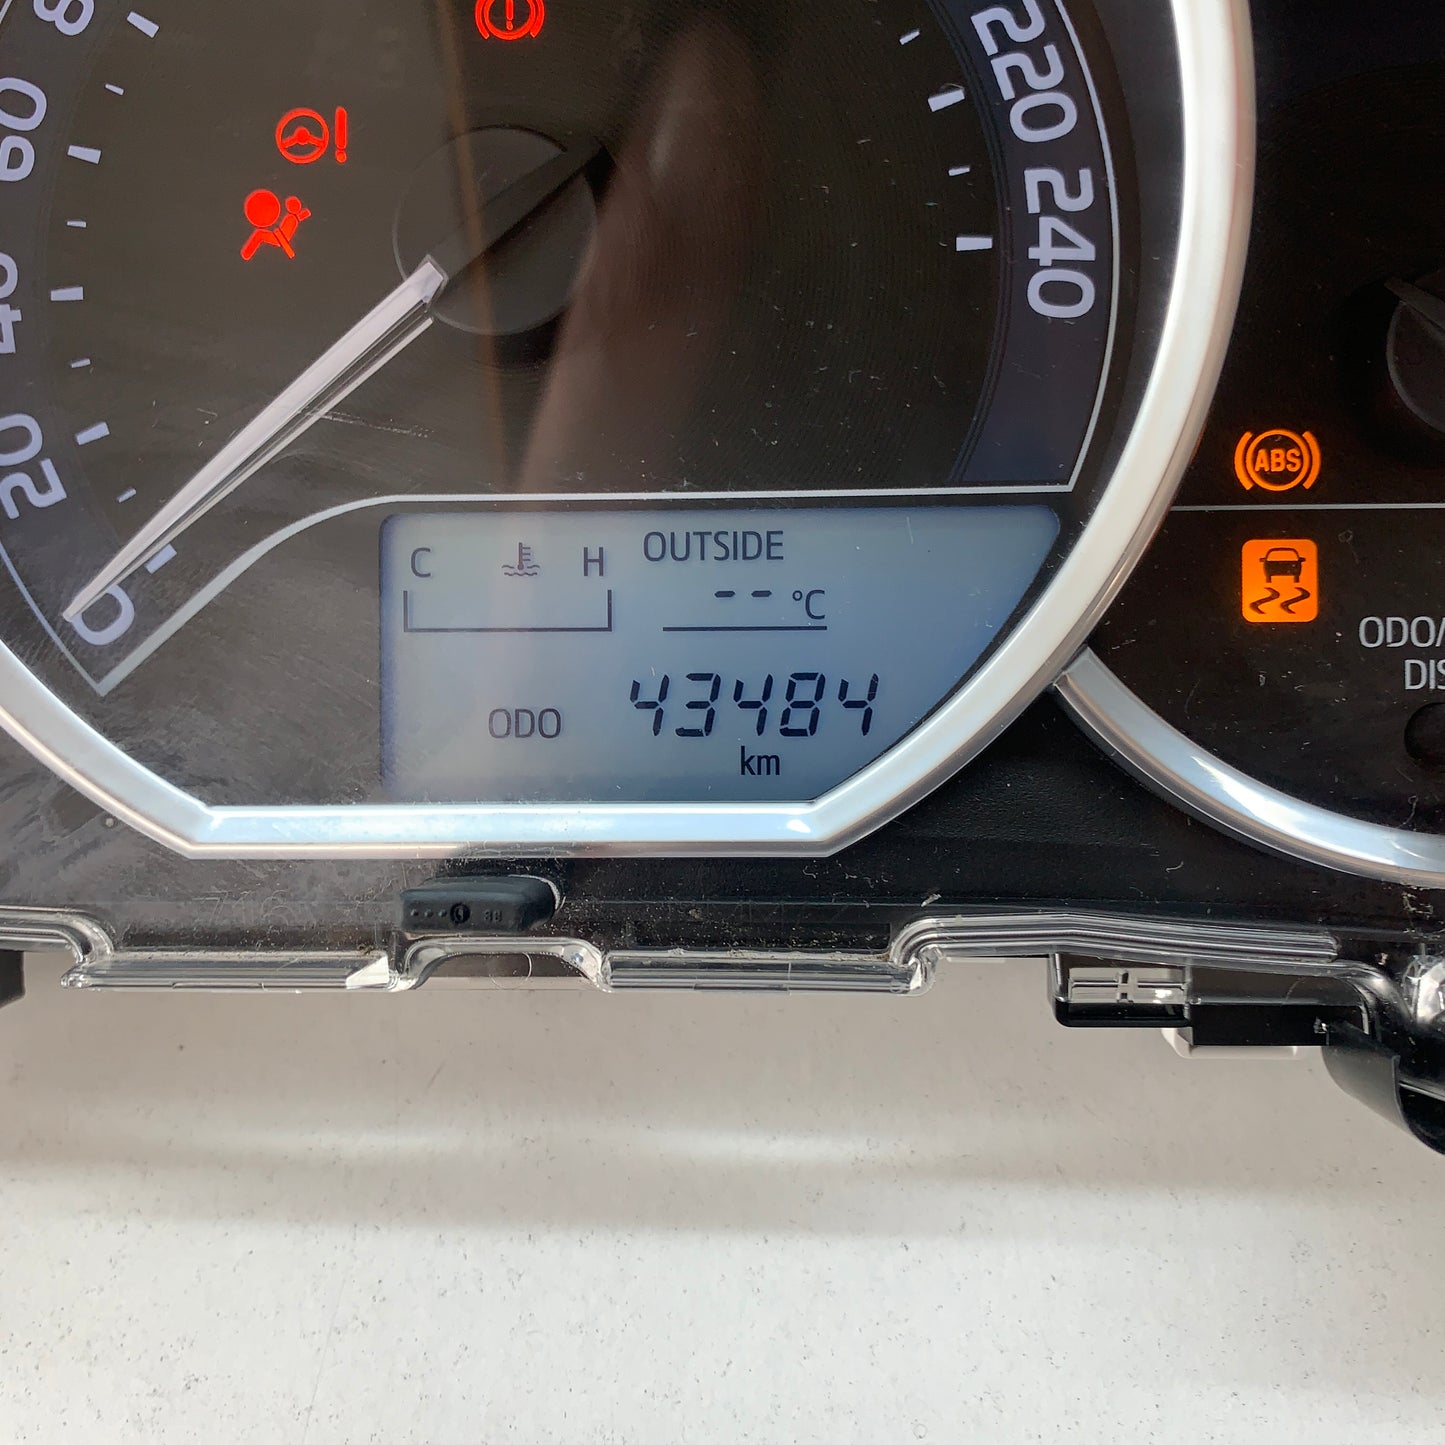 Toyota Corolla Hatchback Instrument Cluster ZRE182R 2015 2016 2017 2018 43484km